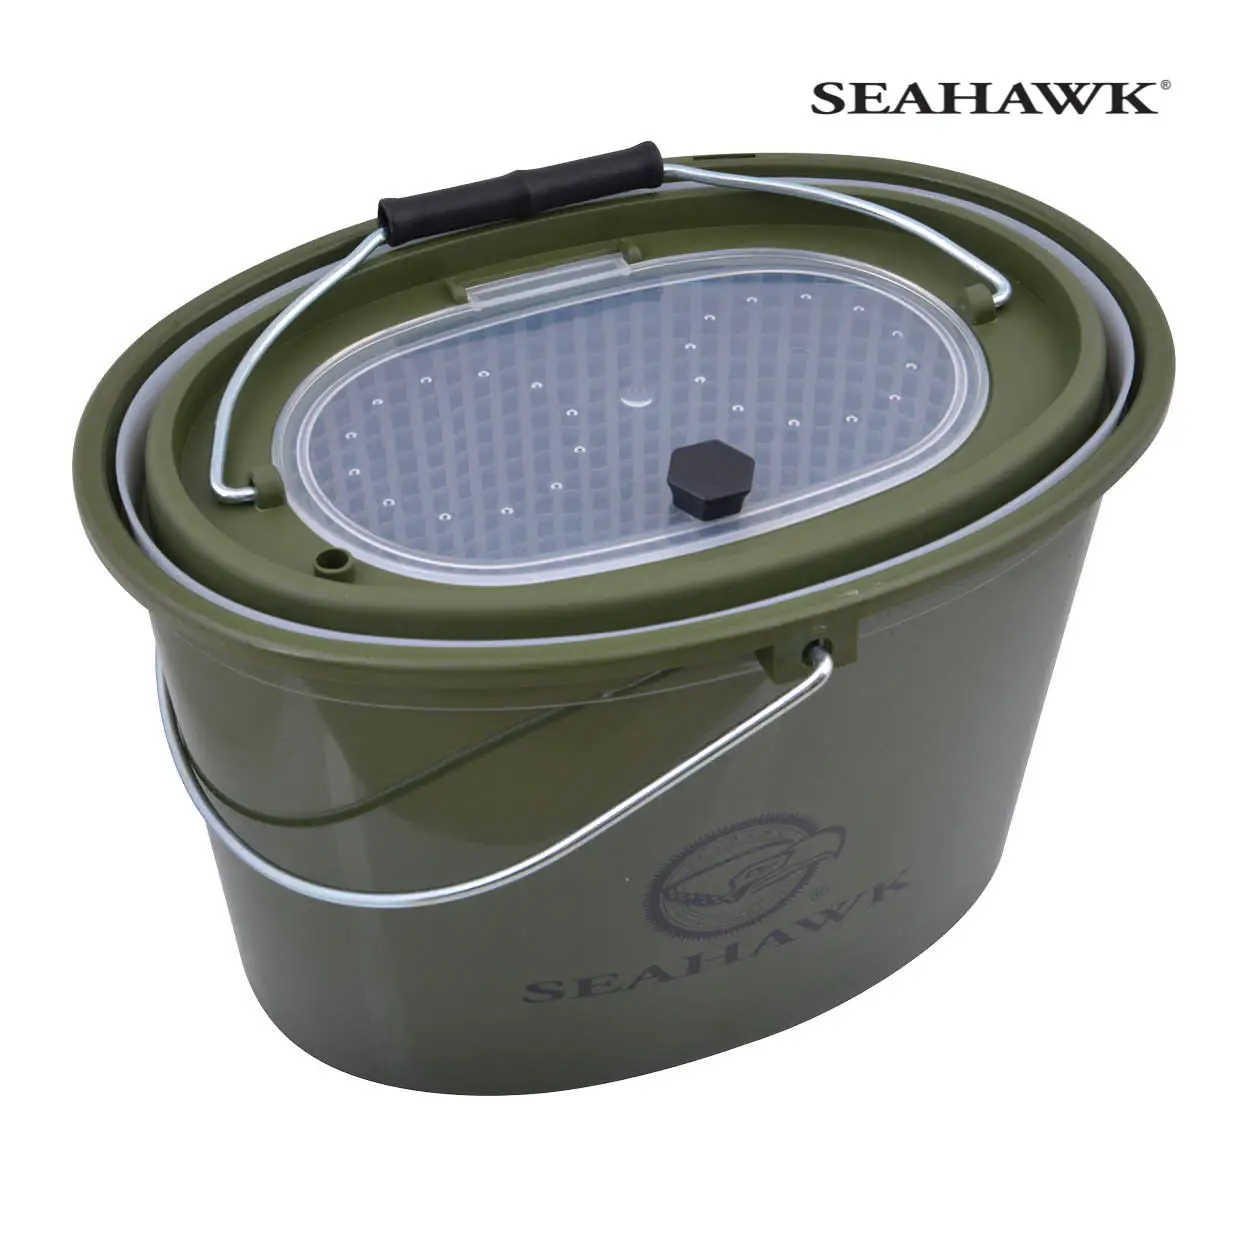 https://seahawkfishing.com/wp-content/uploads/2020/07/Seahawk-Live-Bait-Box-MB9325-LBB-02-Dark-Green.jpg.webp